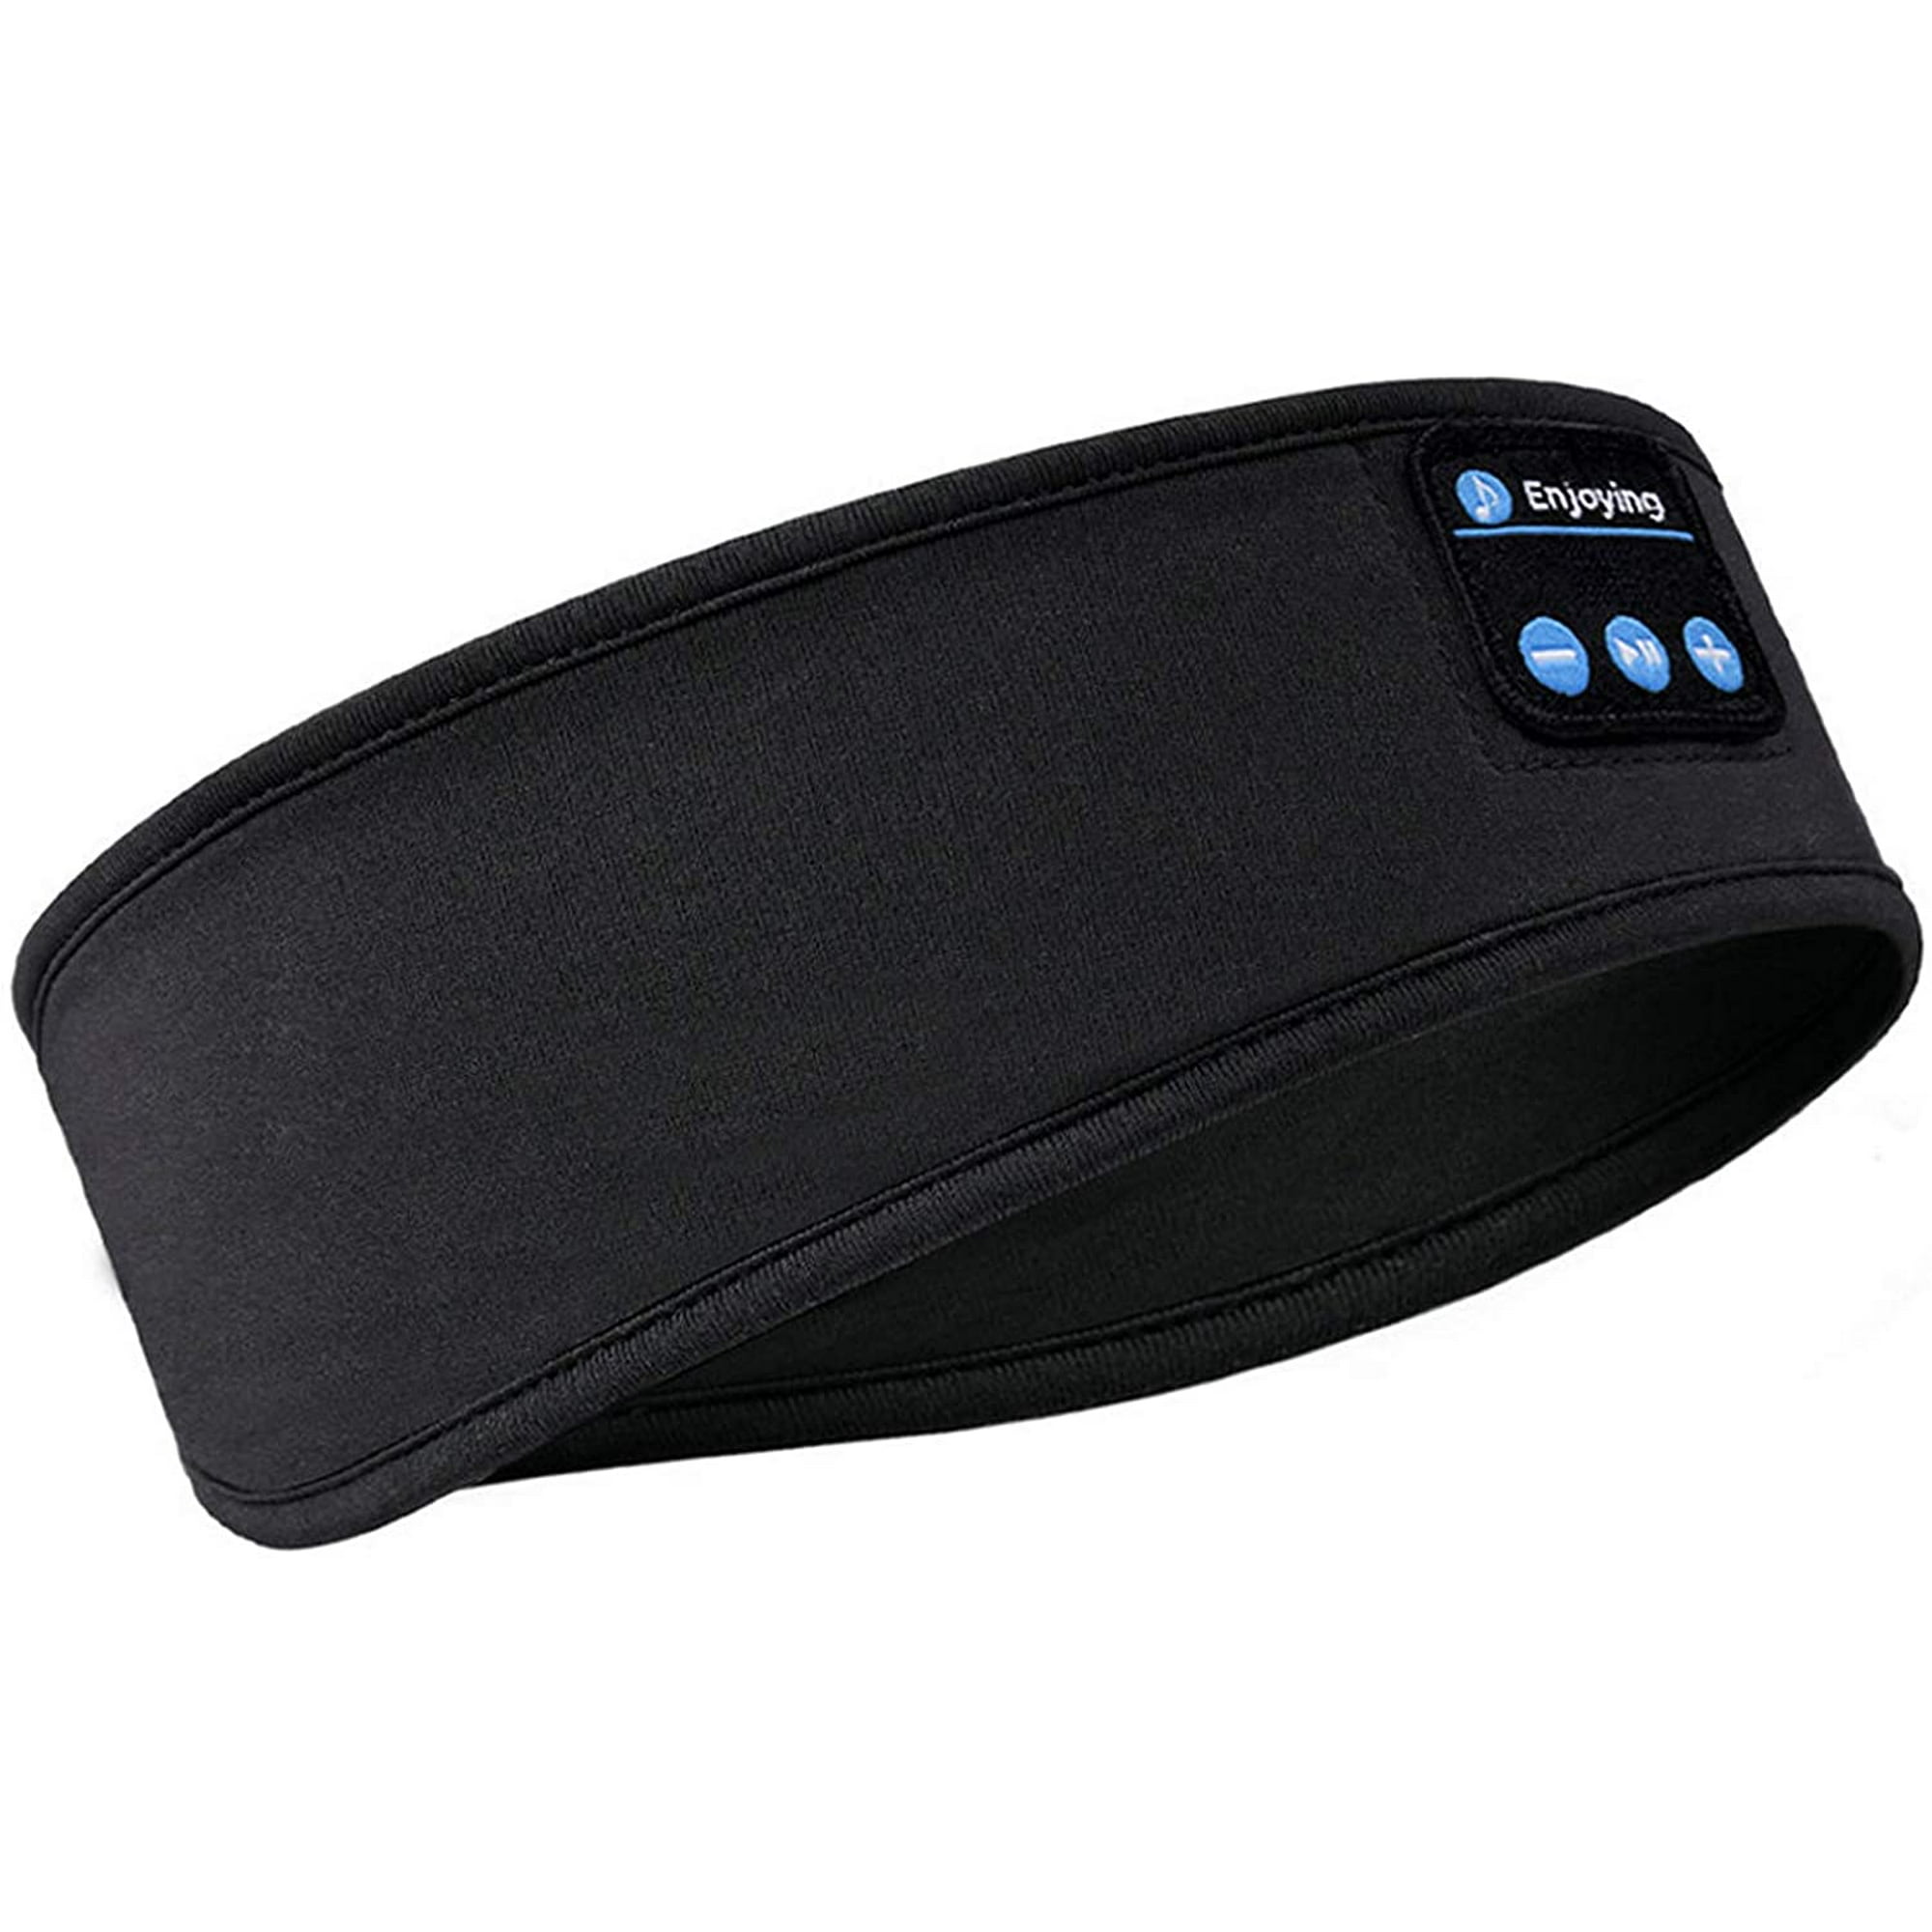 Venta Internacional - Auriculares Para Dormir Diadema Bluetooth